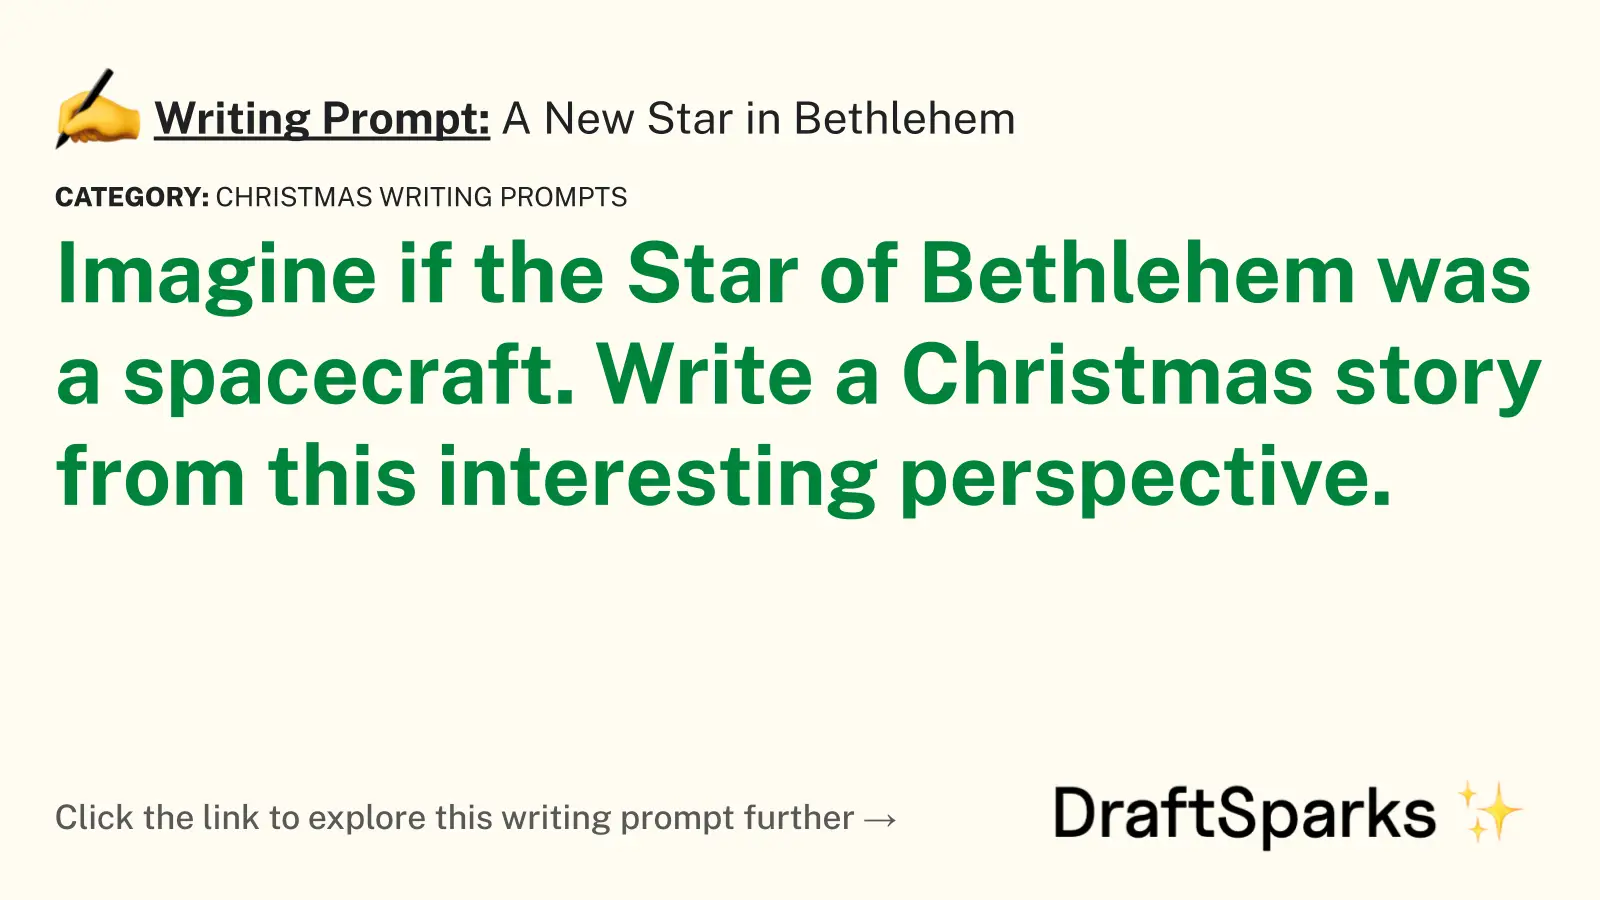 A New Star in Bethlehem